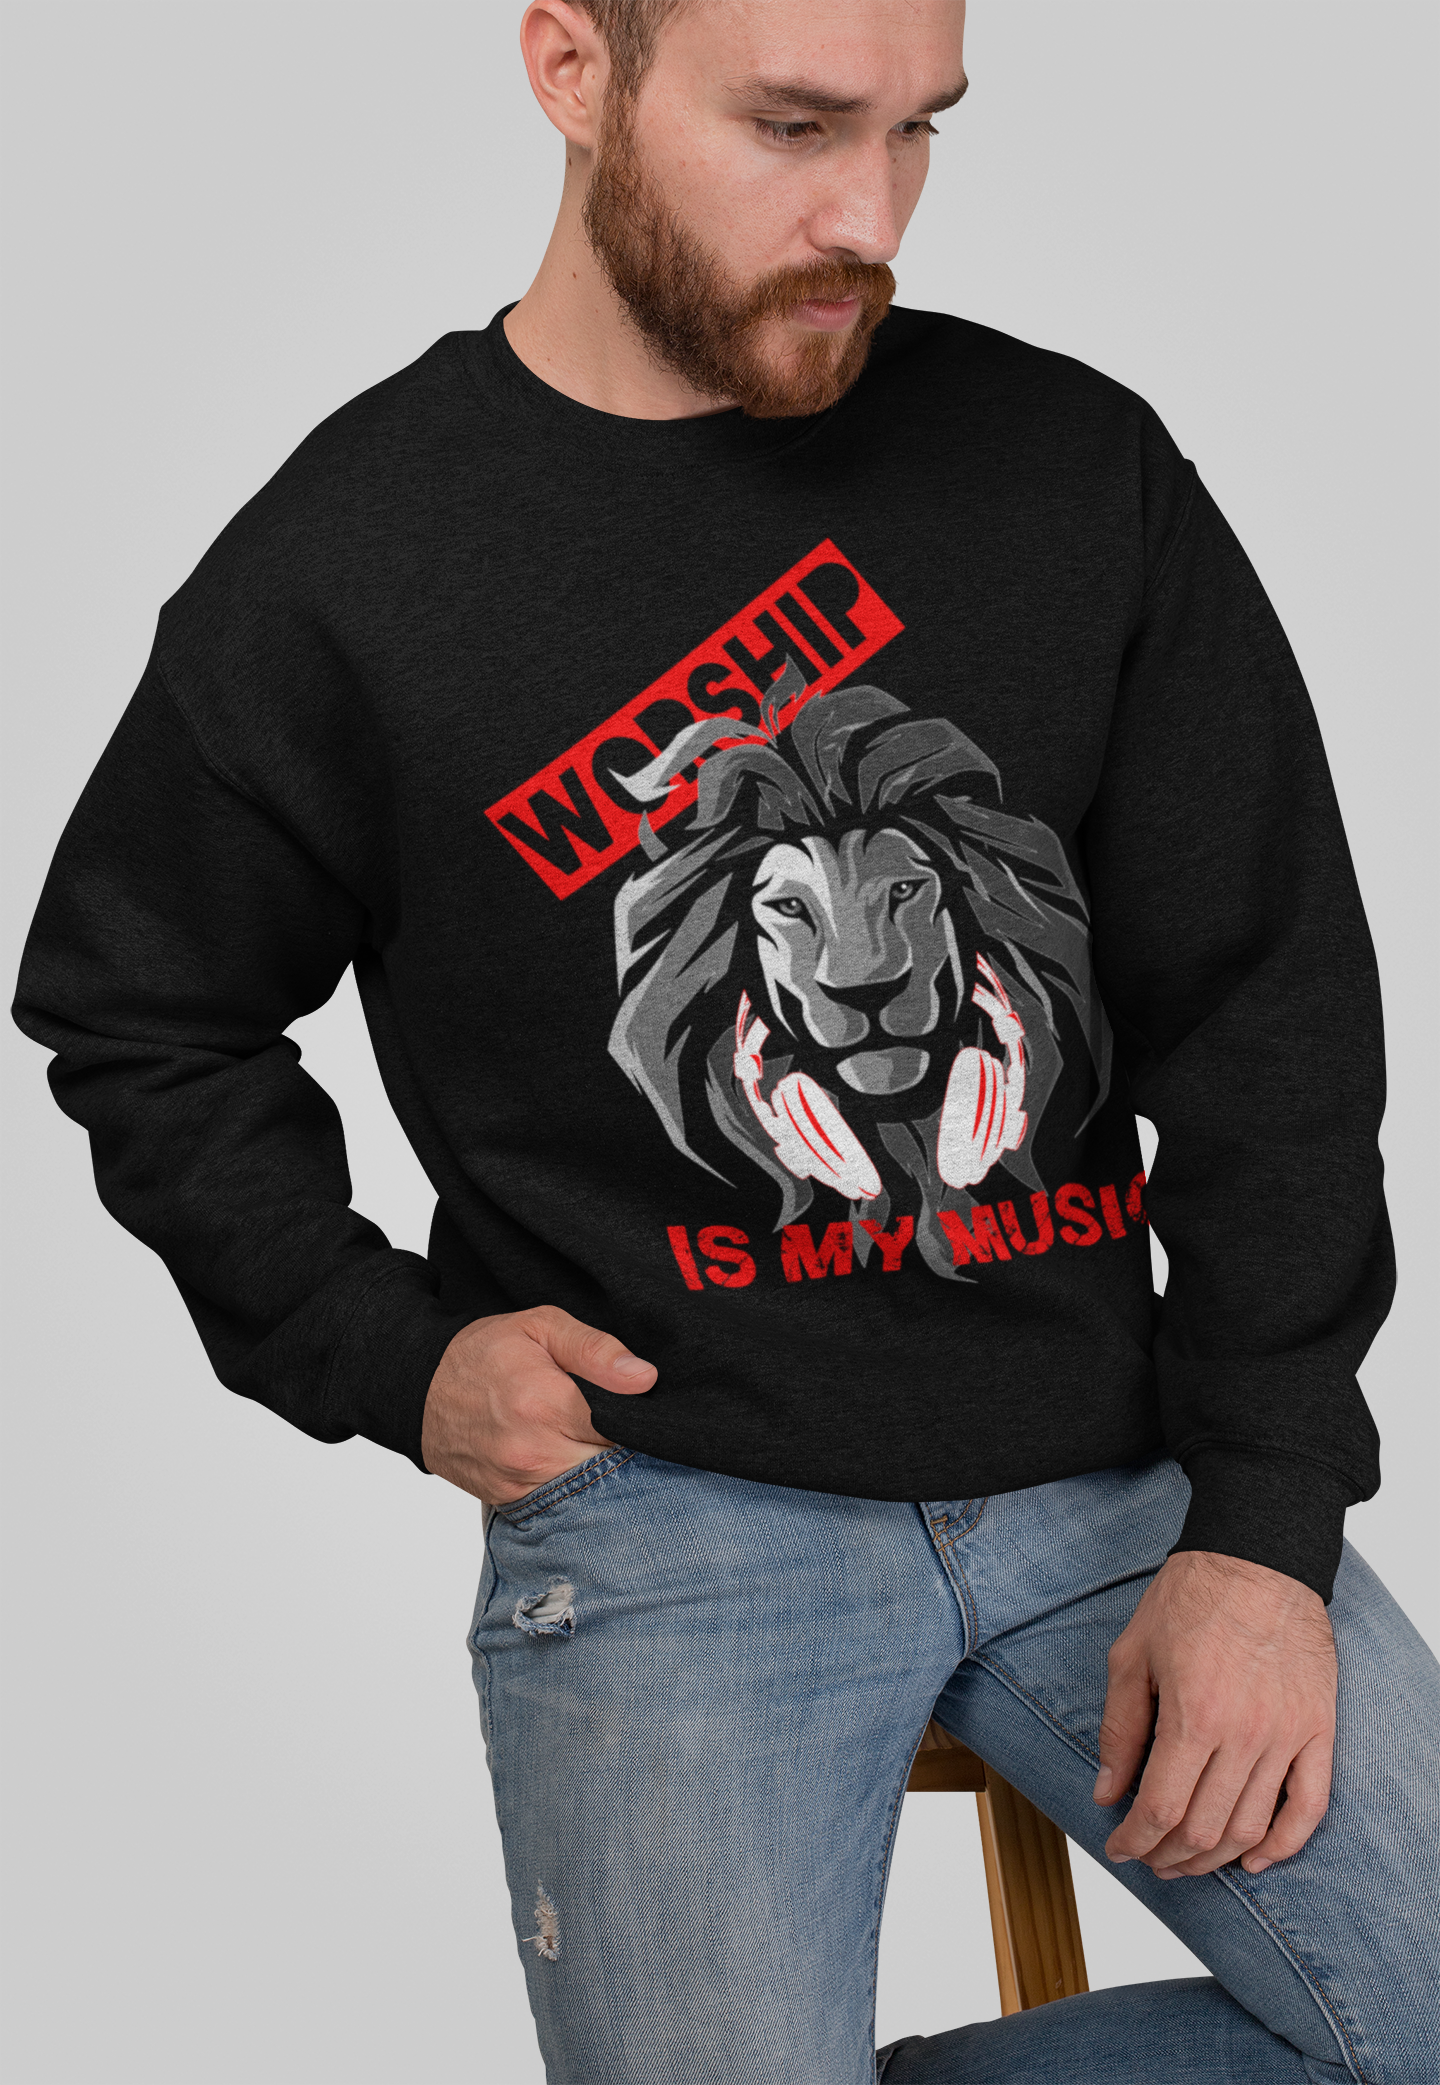 Worship is my music - Sweatshirt (unisex)